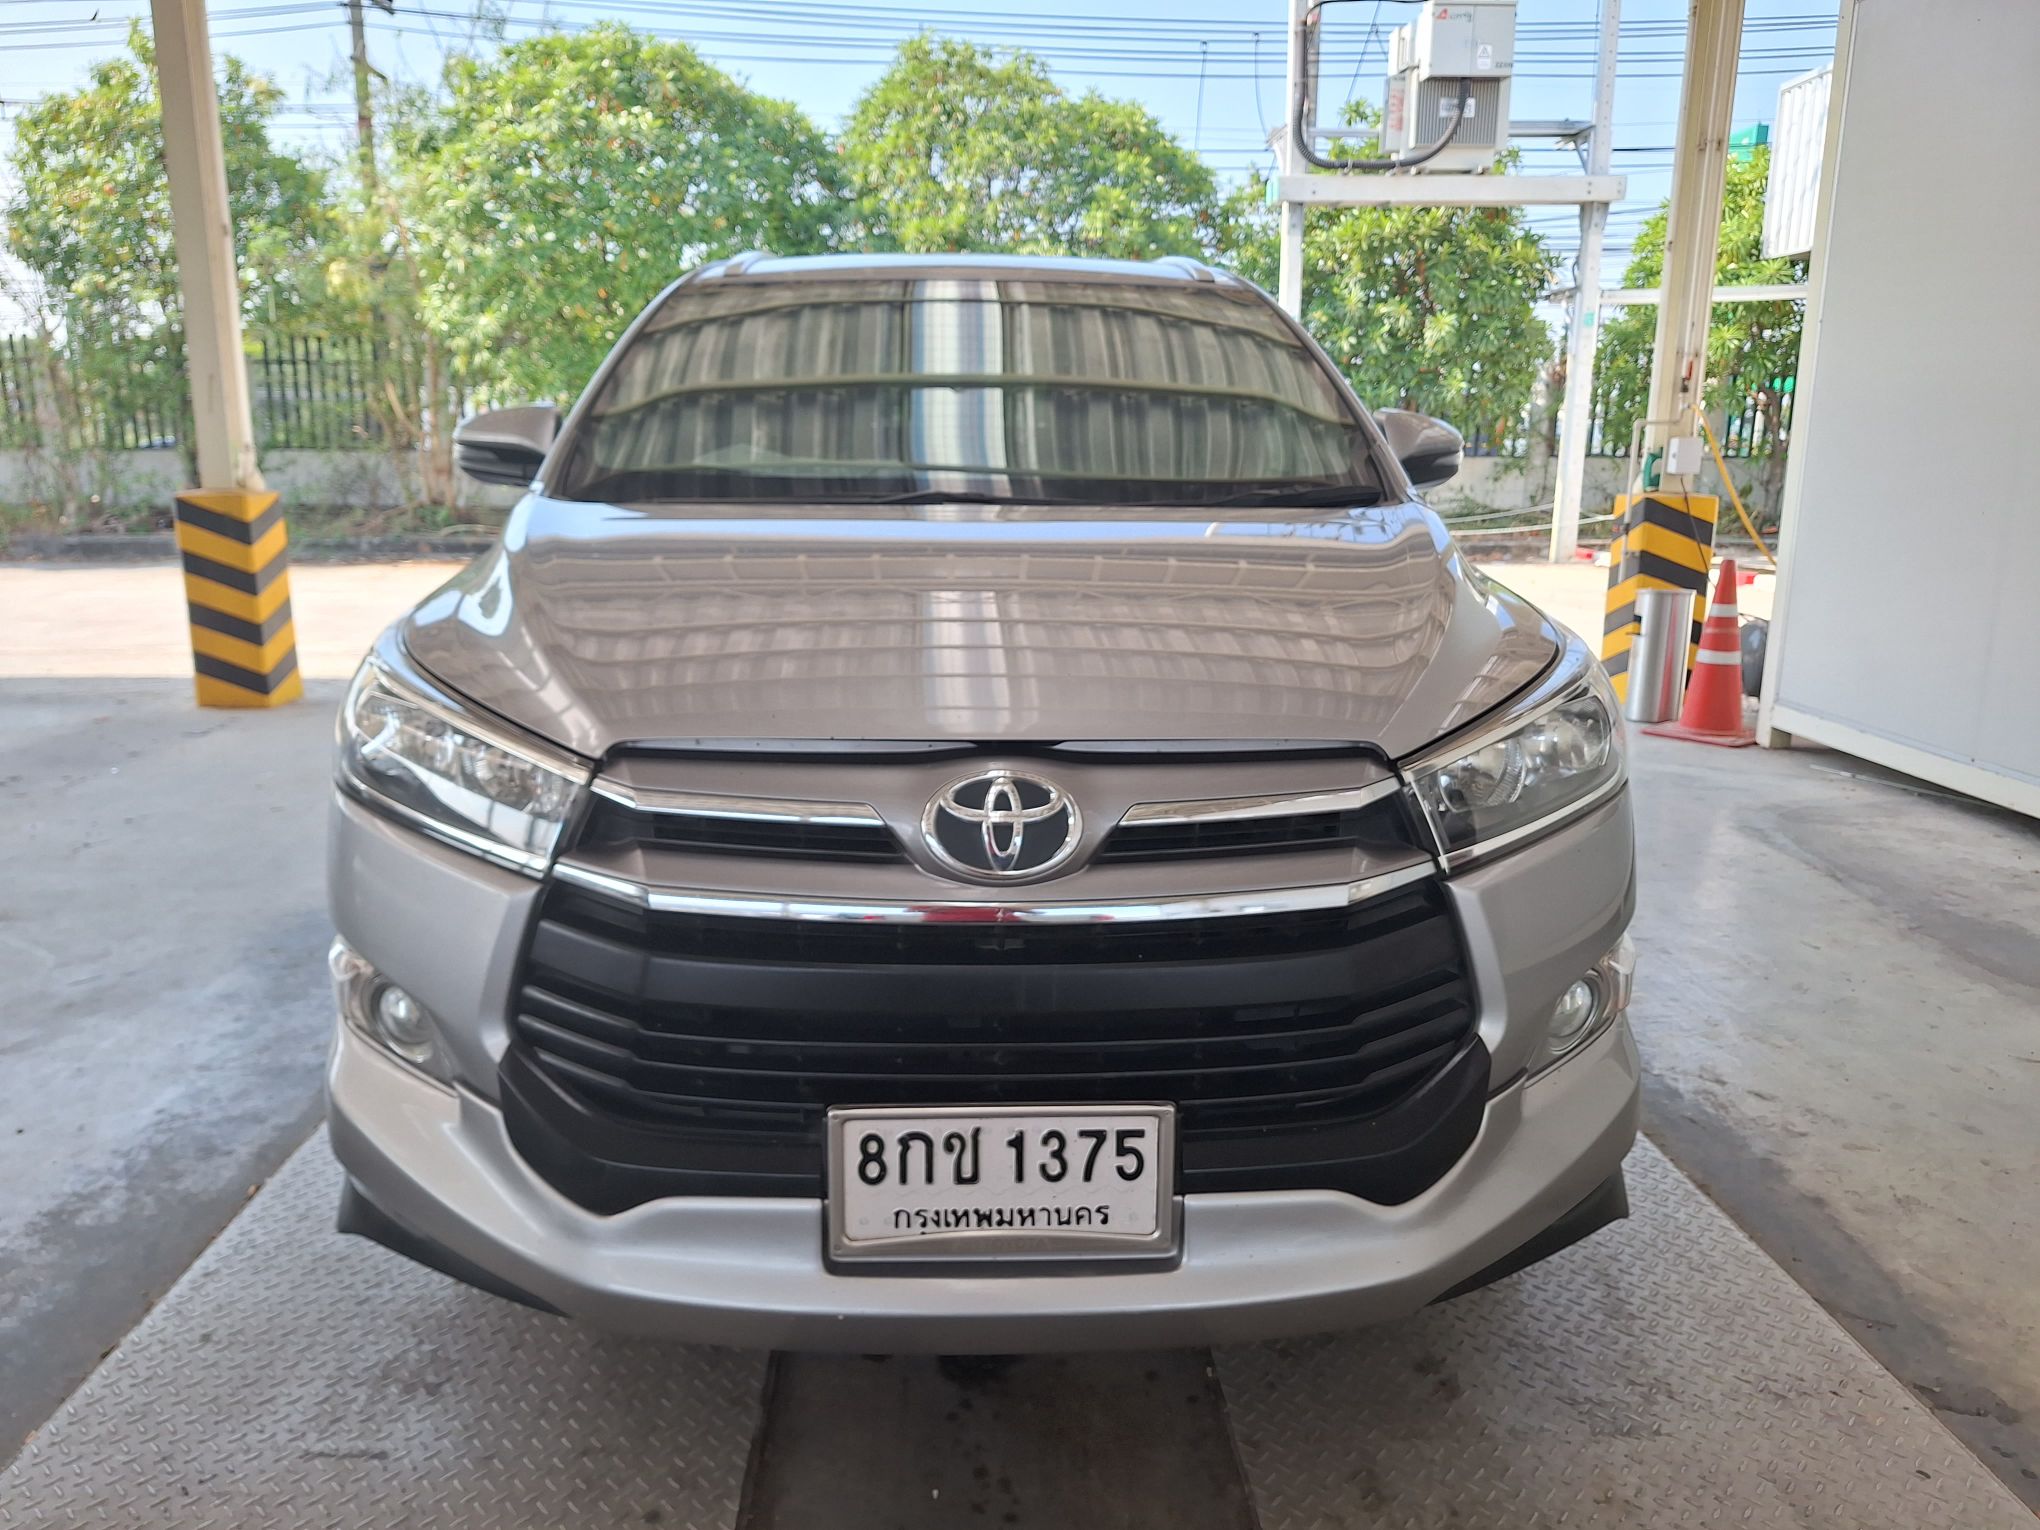 2018 - Toyota car